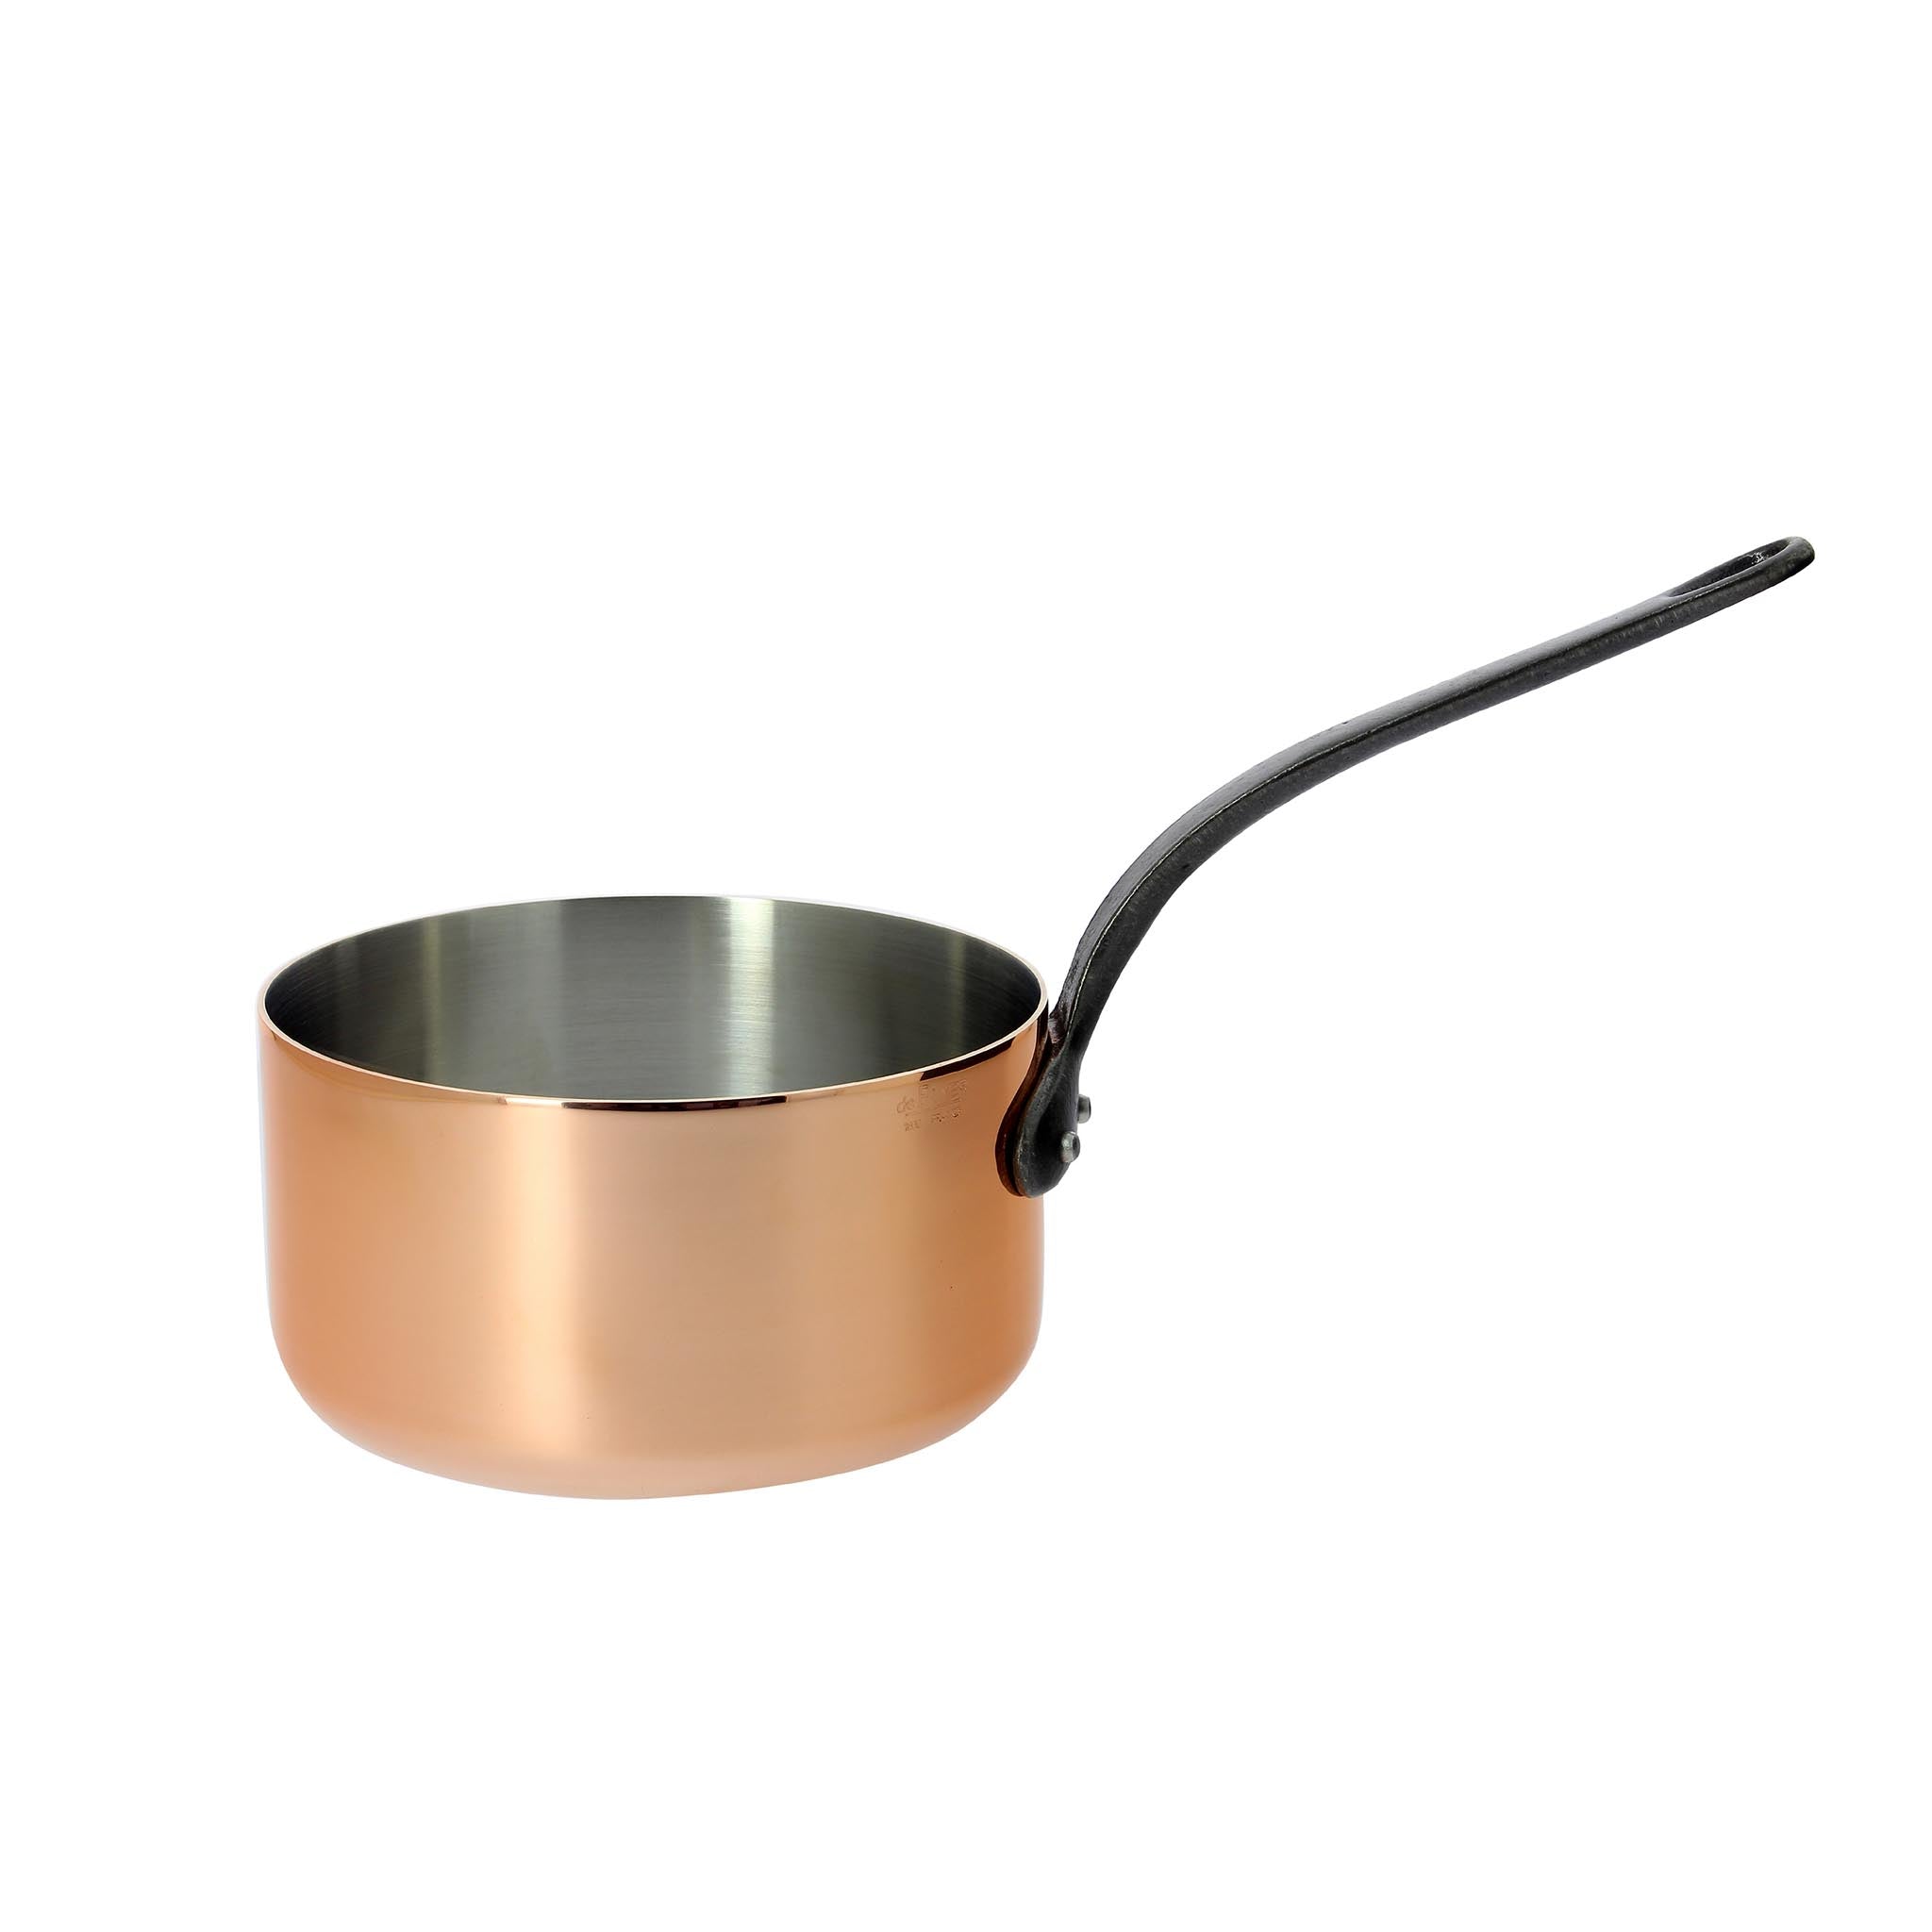 de Buyer Prima Matera copper saucepan 16 cm 6206.16